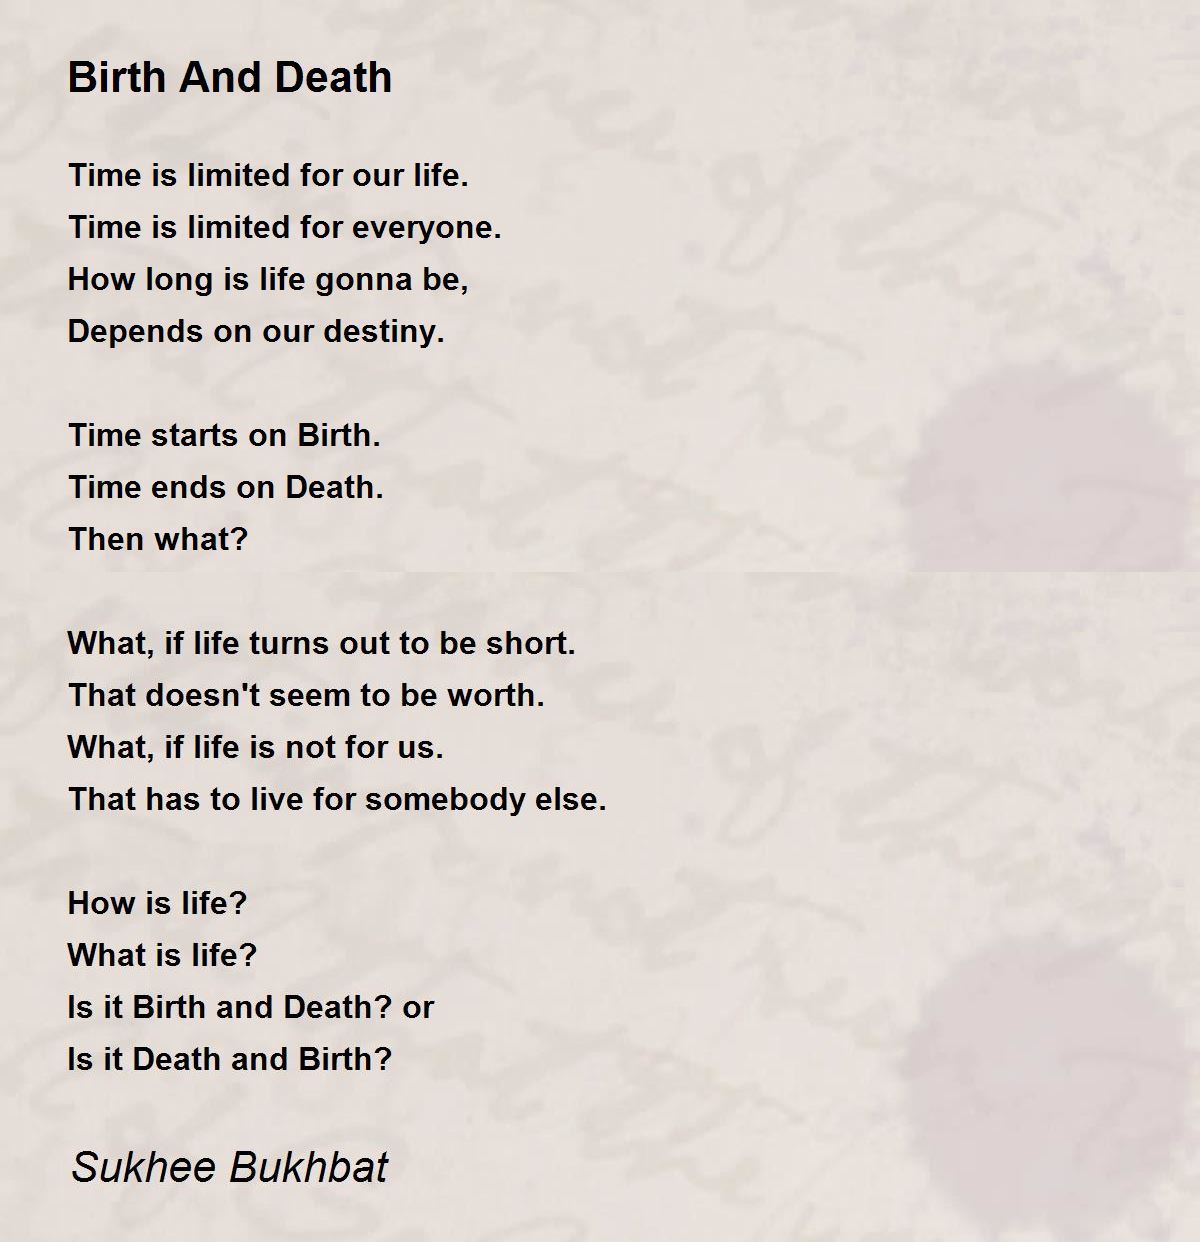 Lyrics: The Beatles - Yesterday - Lyrics: The Beatles - Yesterday Poem by  Sukhee Bukhbat